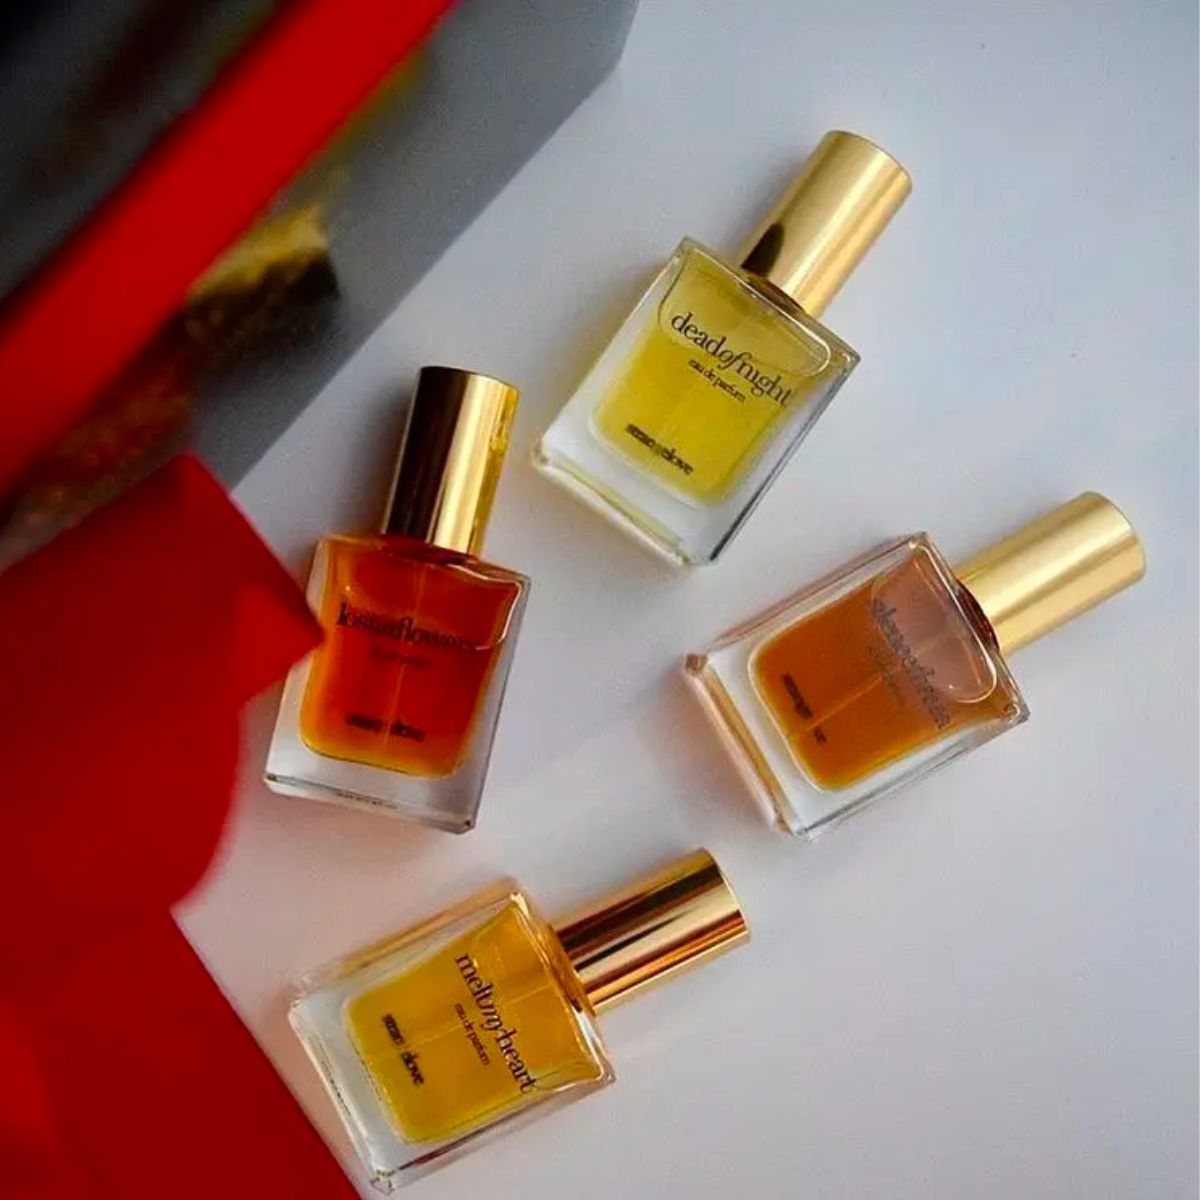 Image of the 15 ml eau de parfum collection by Strangelove